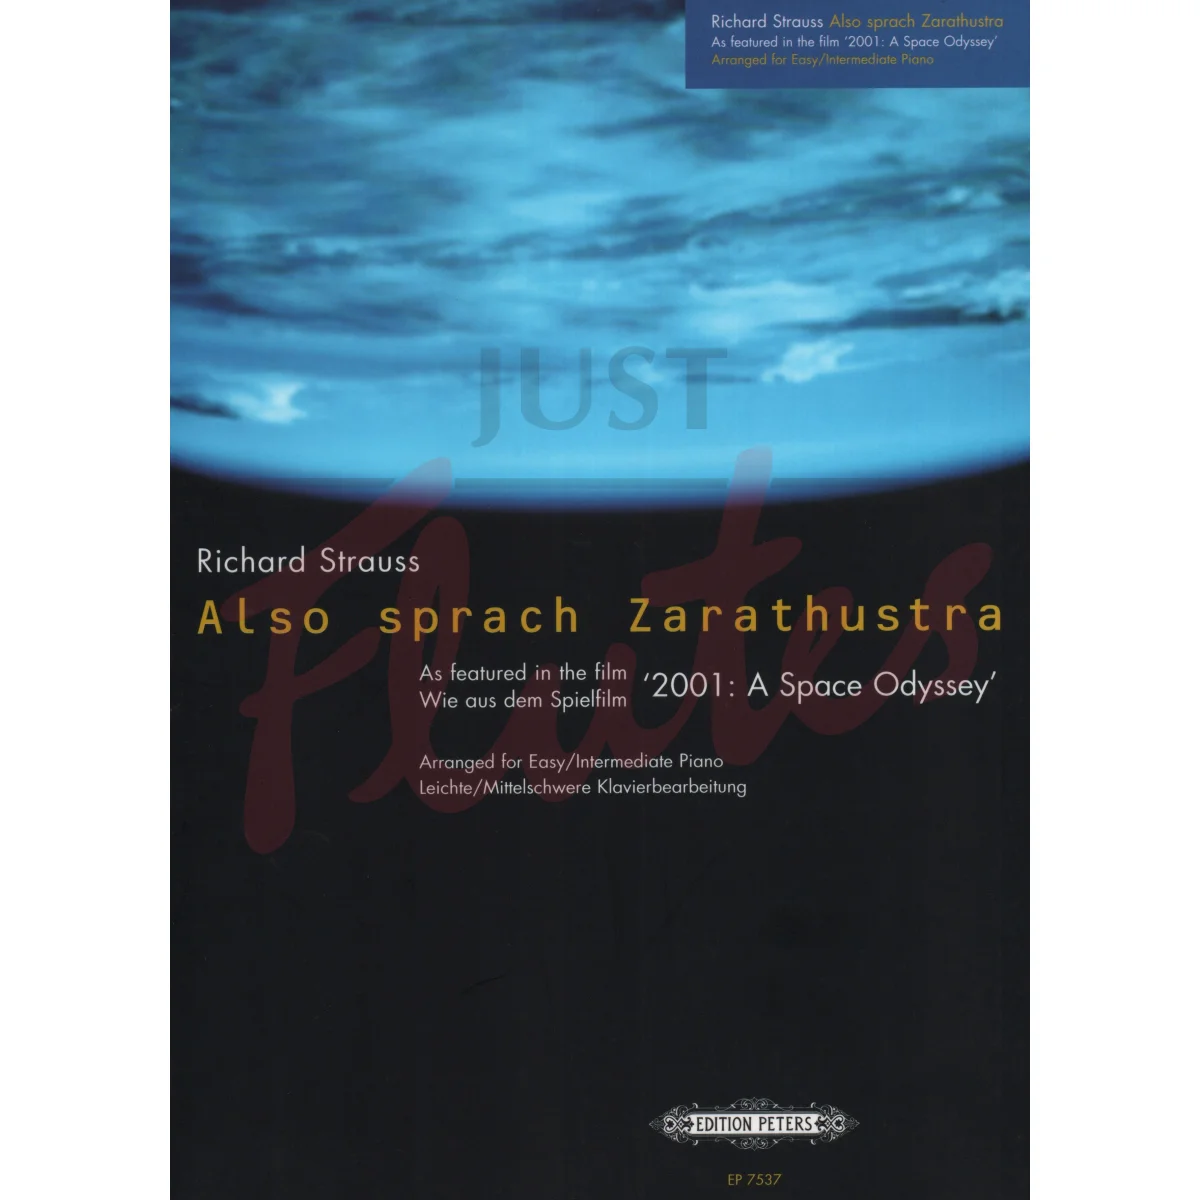 Also sprach Zarathustra for Easy/Intermediate Piano